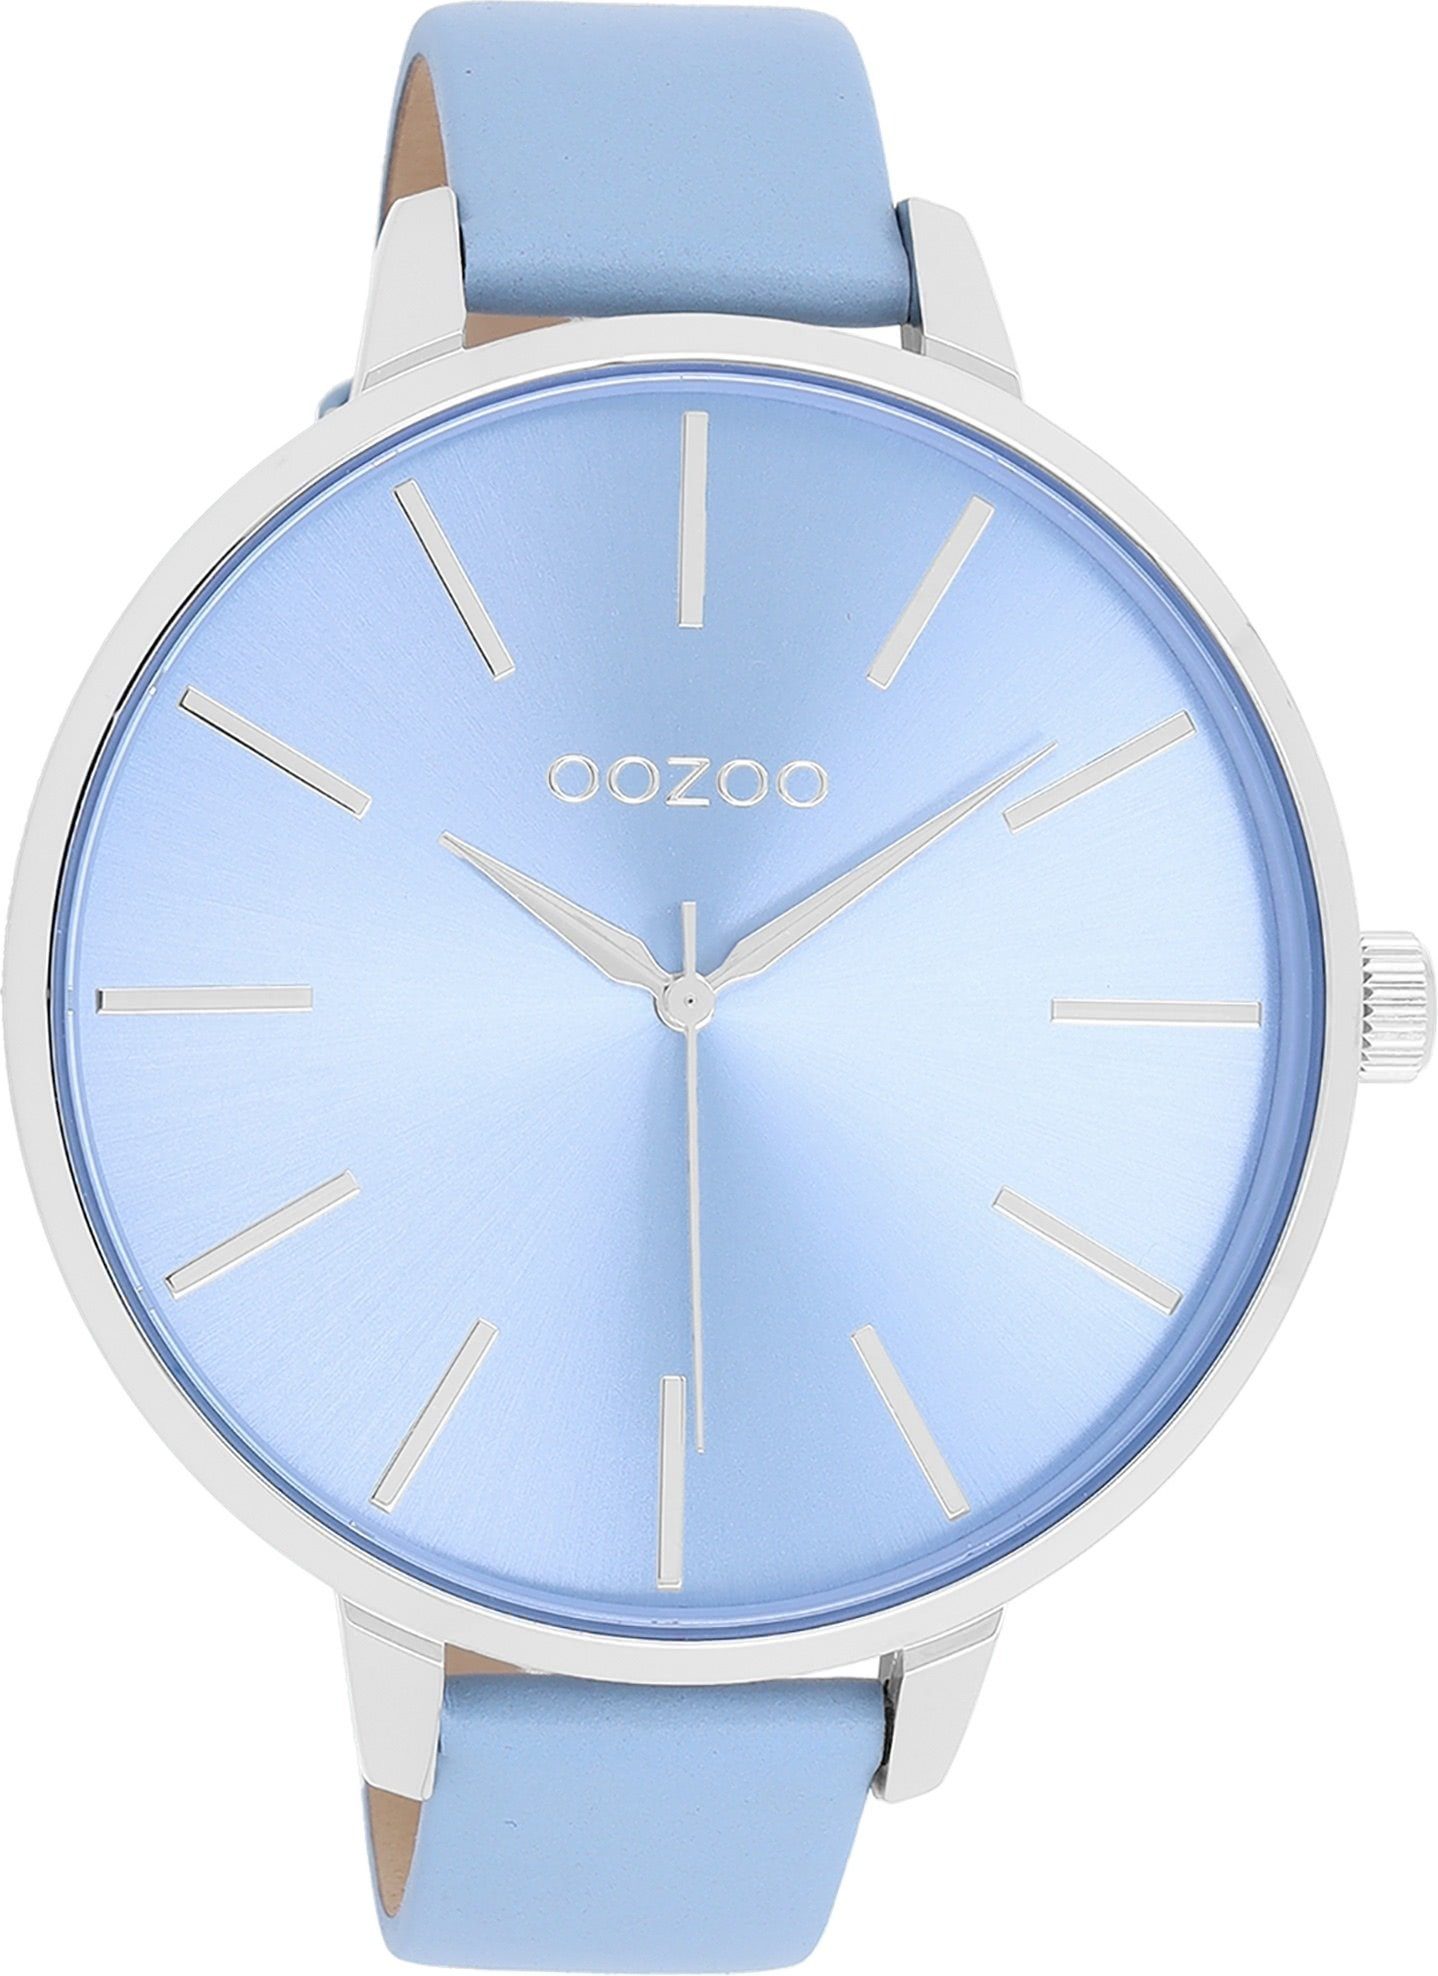 (ca. OOZOO Timepieces groß Fashion-Style Damenuhr Armbanduhr Lederarmband, Analog, Oozoo 48mm) Quarzuhr rund, extra Damen